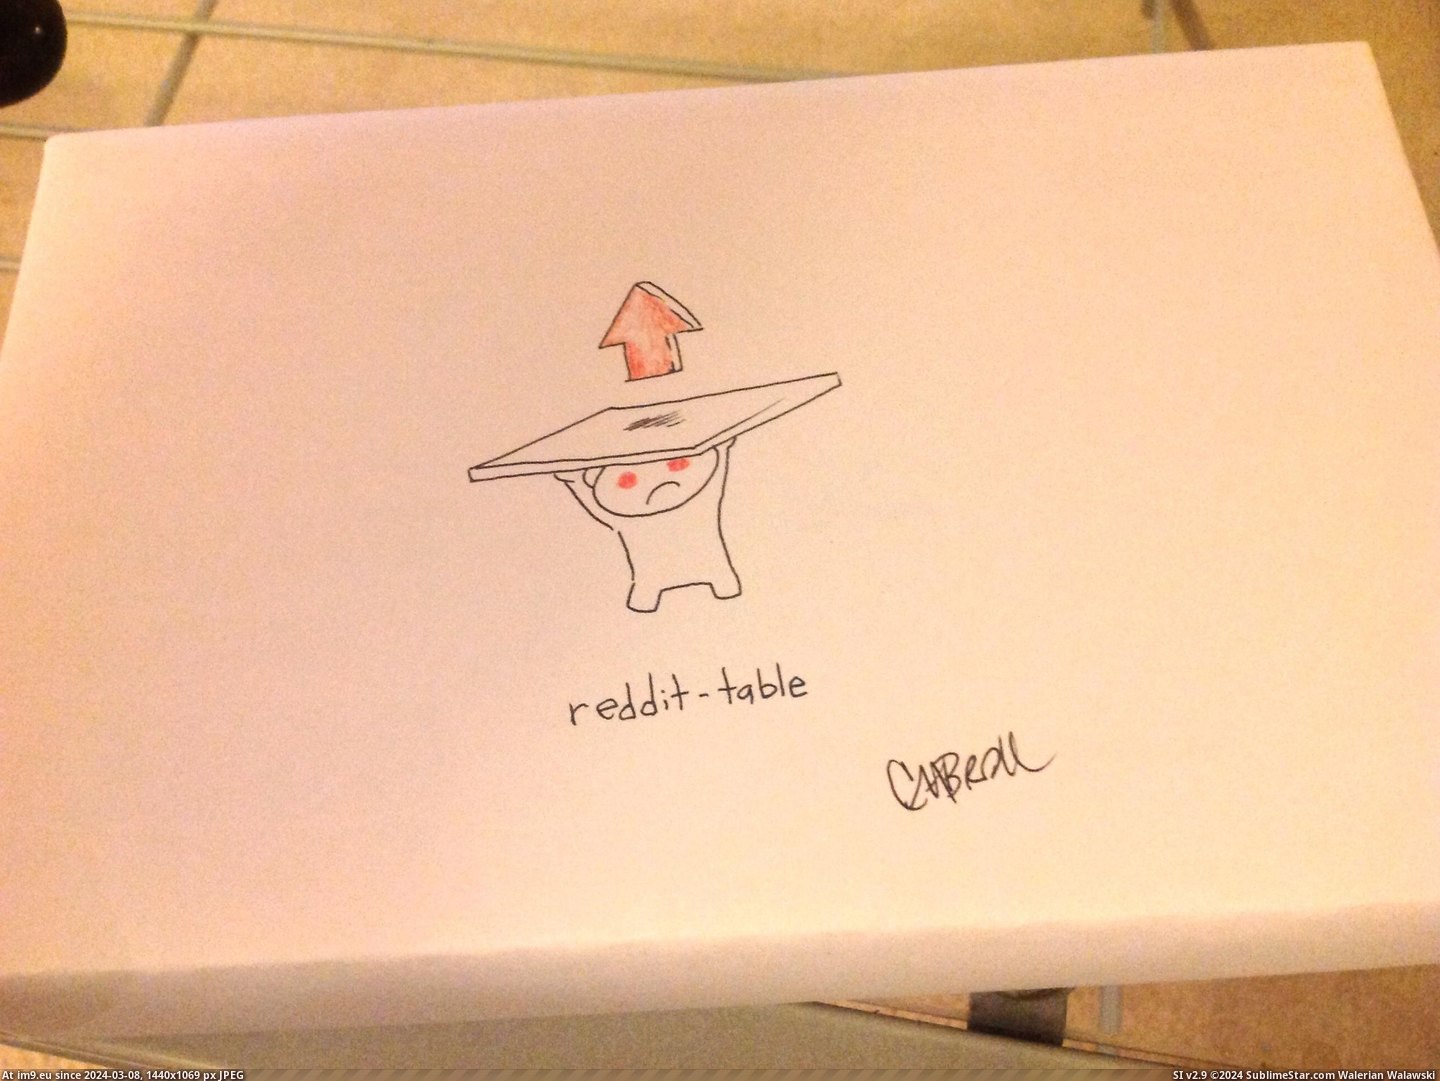 #Box #Redditable #Draw [Pics] 'Please draw something redditable on the box' 2 Pic. (Изображение из альбом My r/PICS favs))